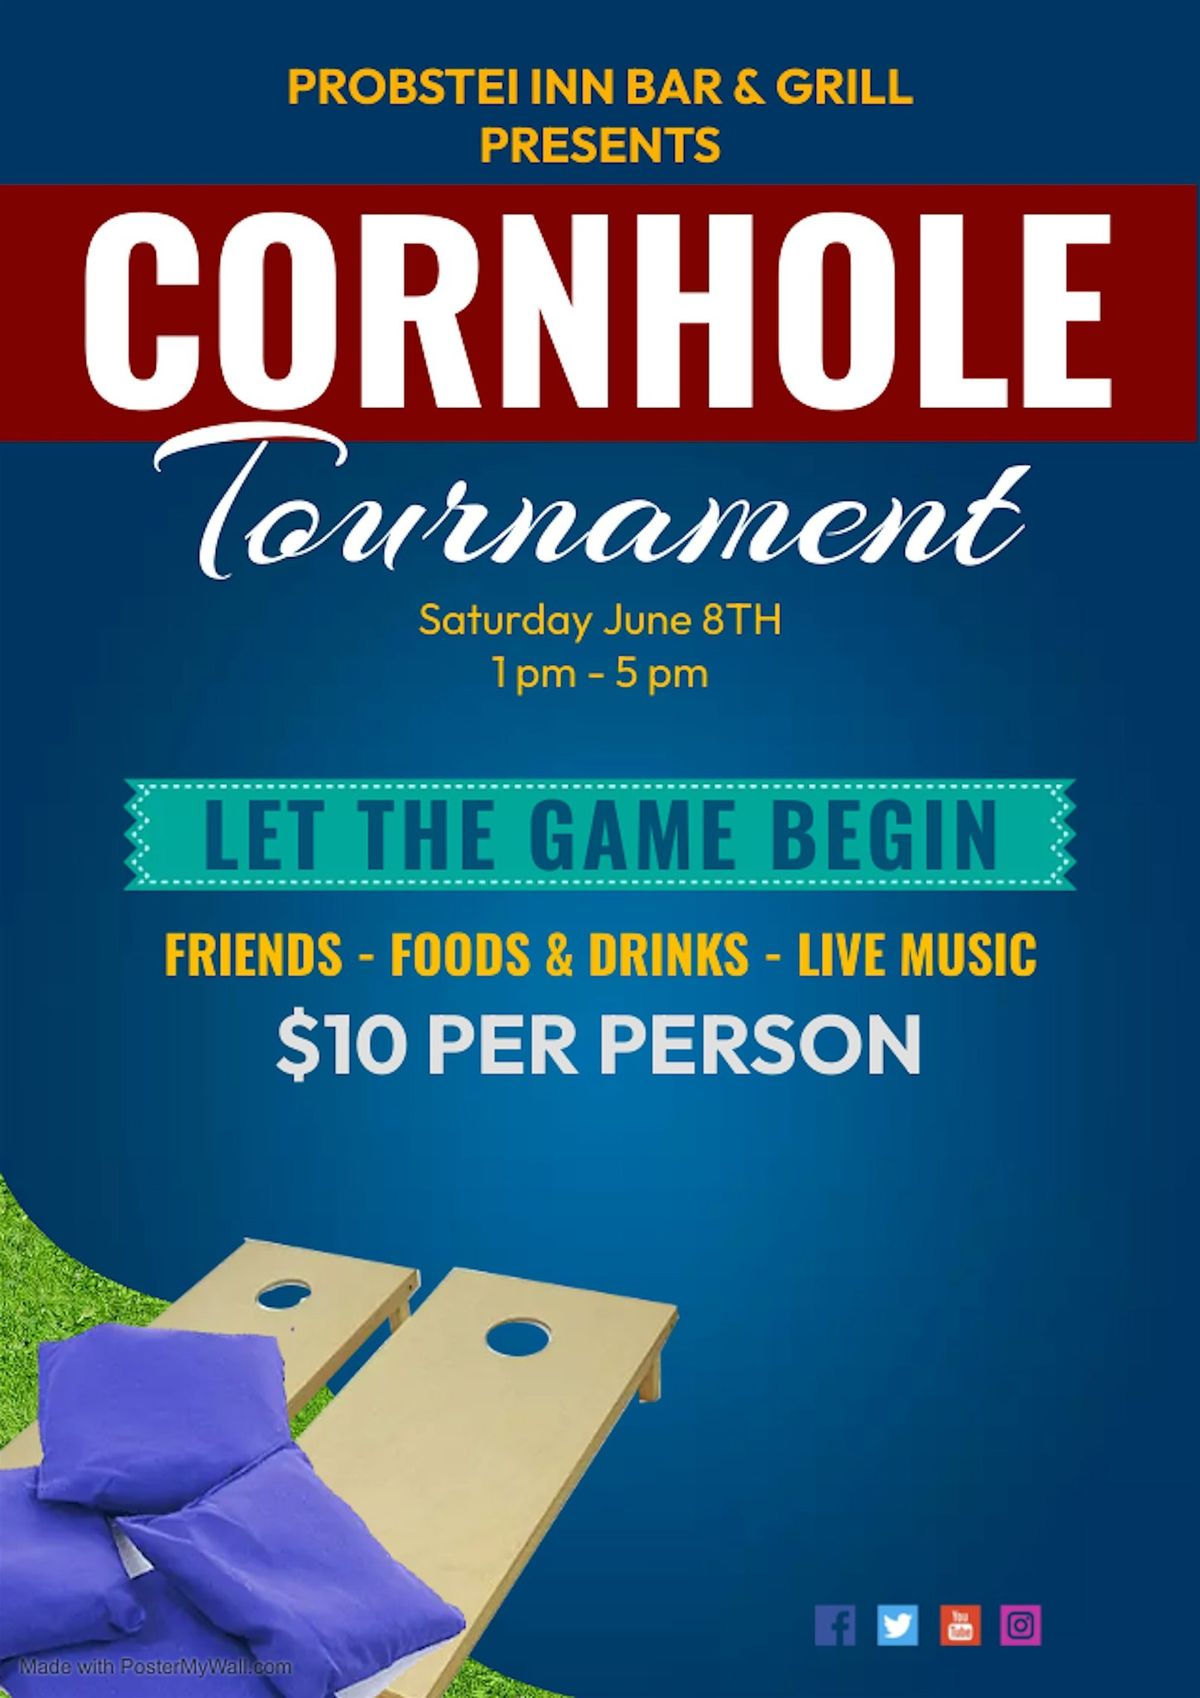 Cornhole Tournament at Probstei